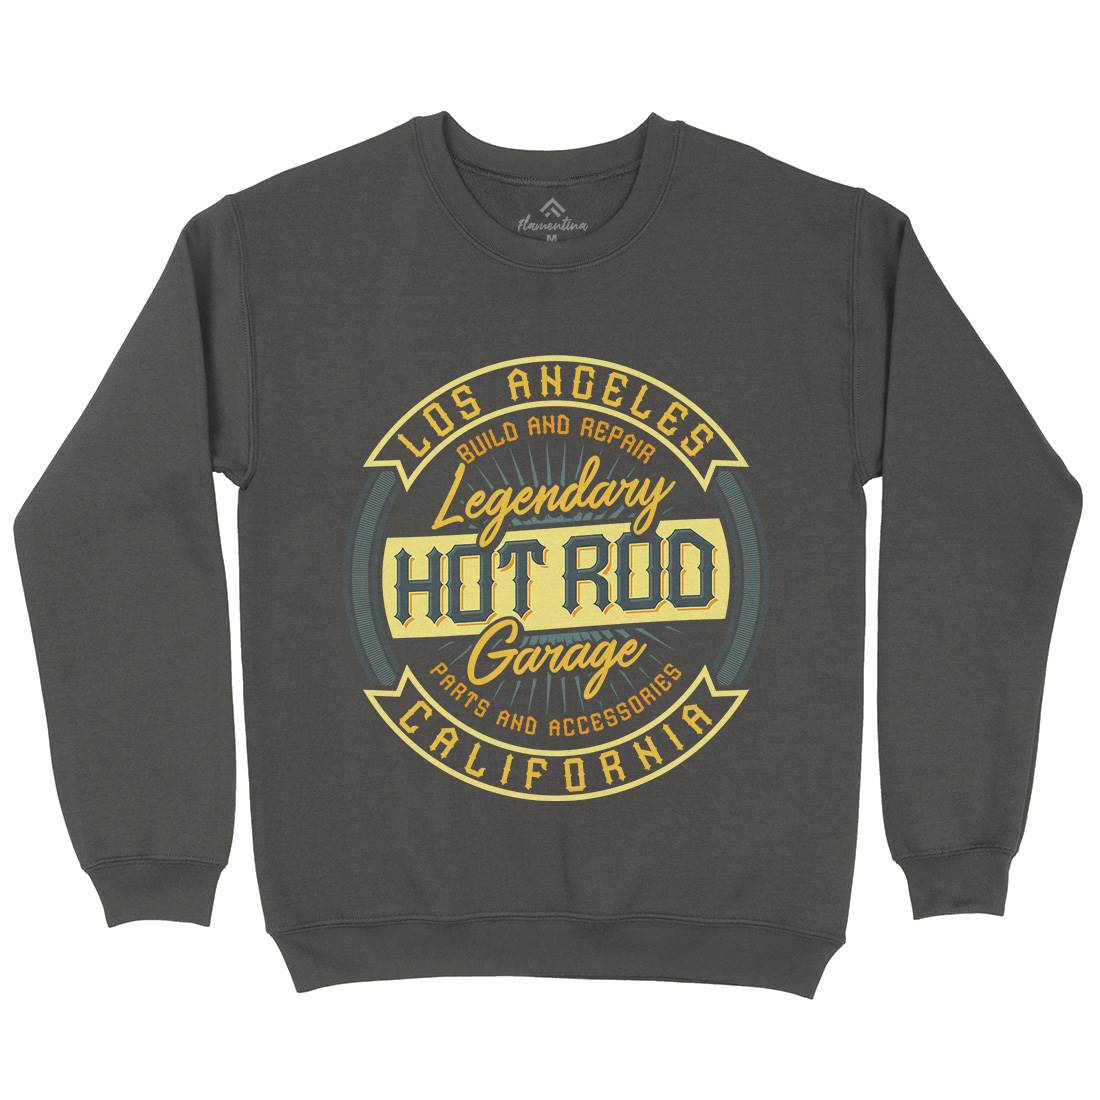 Hot Rod Mens Crew Neck Sweatshirt Cars B306